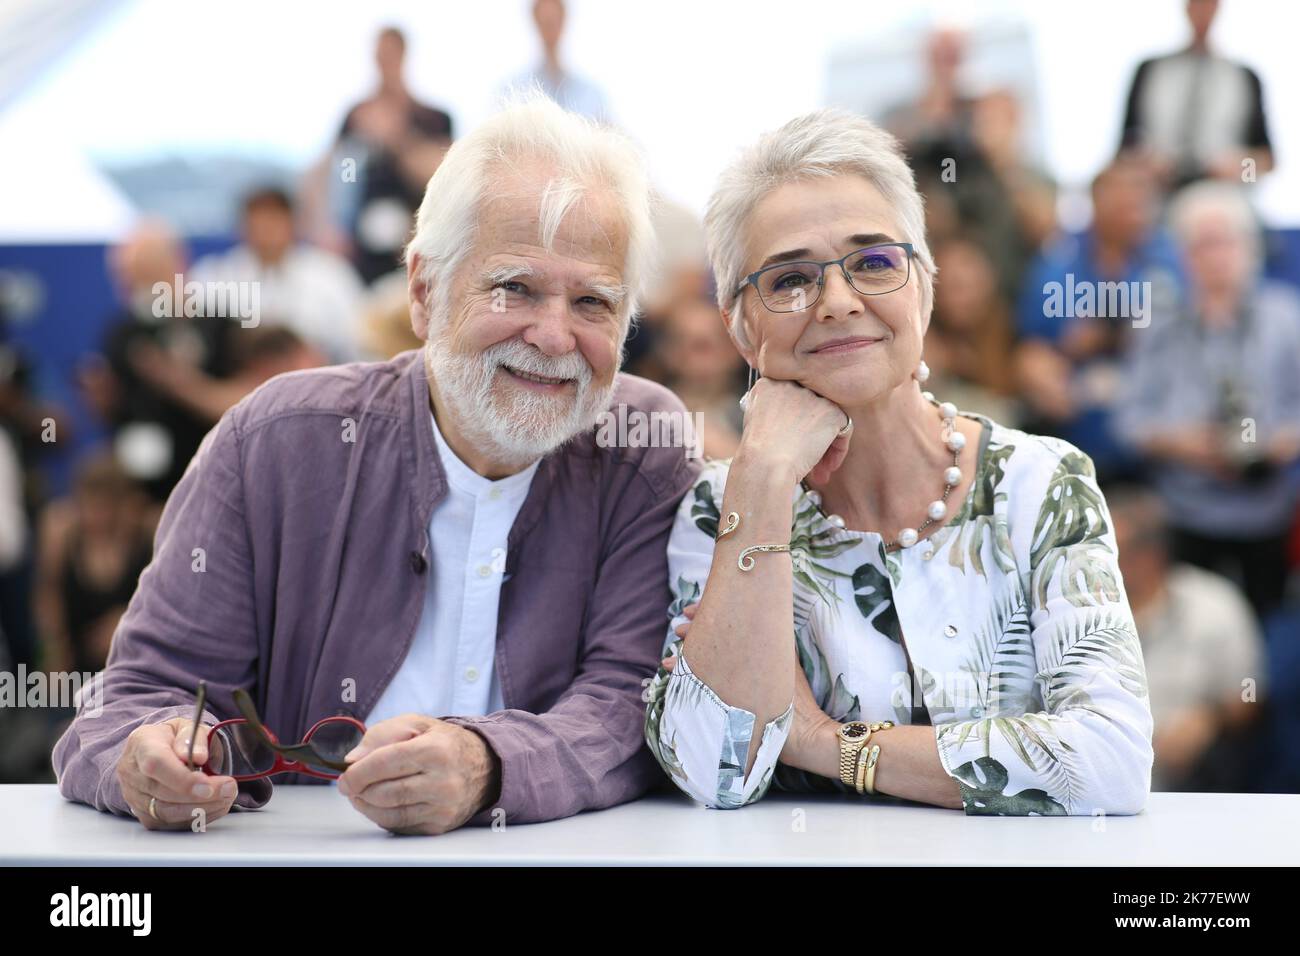 Jan Harlan et Katharina Kubrik assistent au Shining Photocall, lors du Festival de Cannes 72nd Banque D'Images